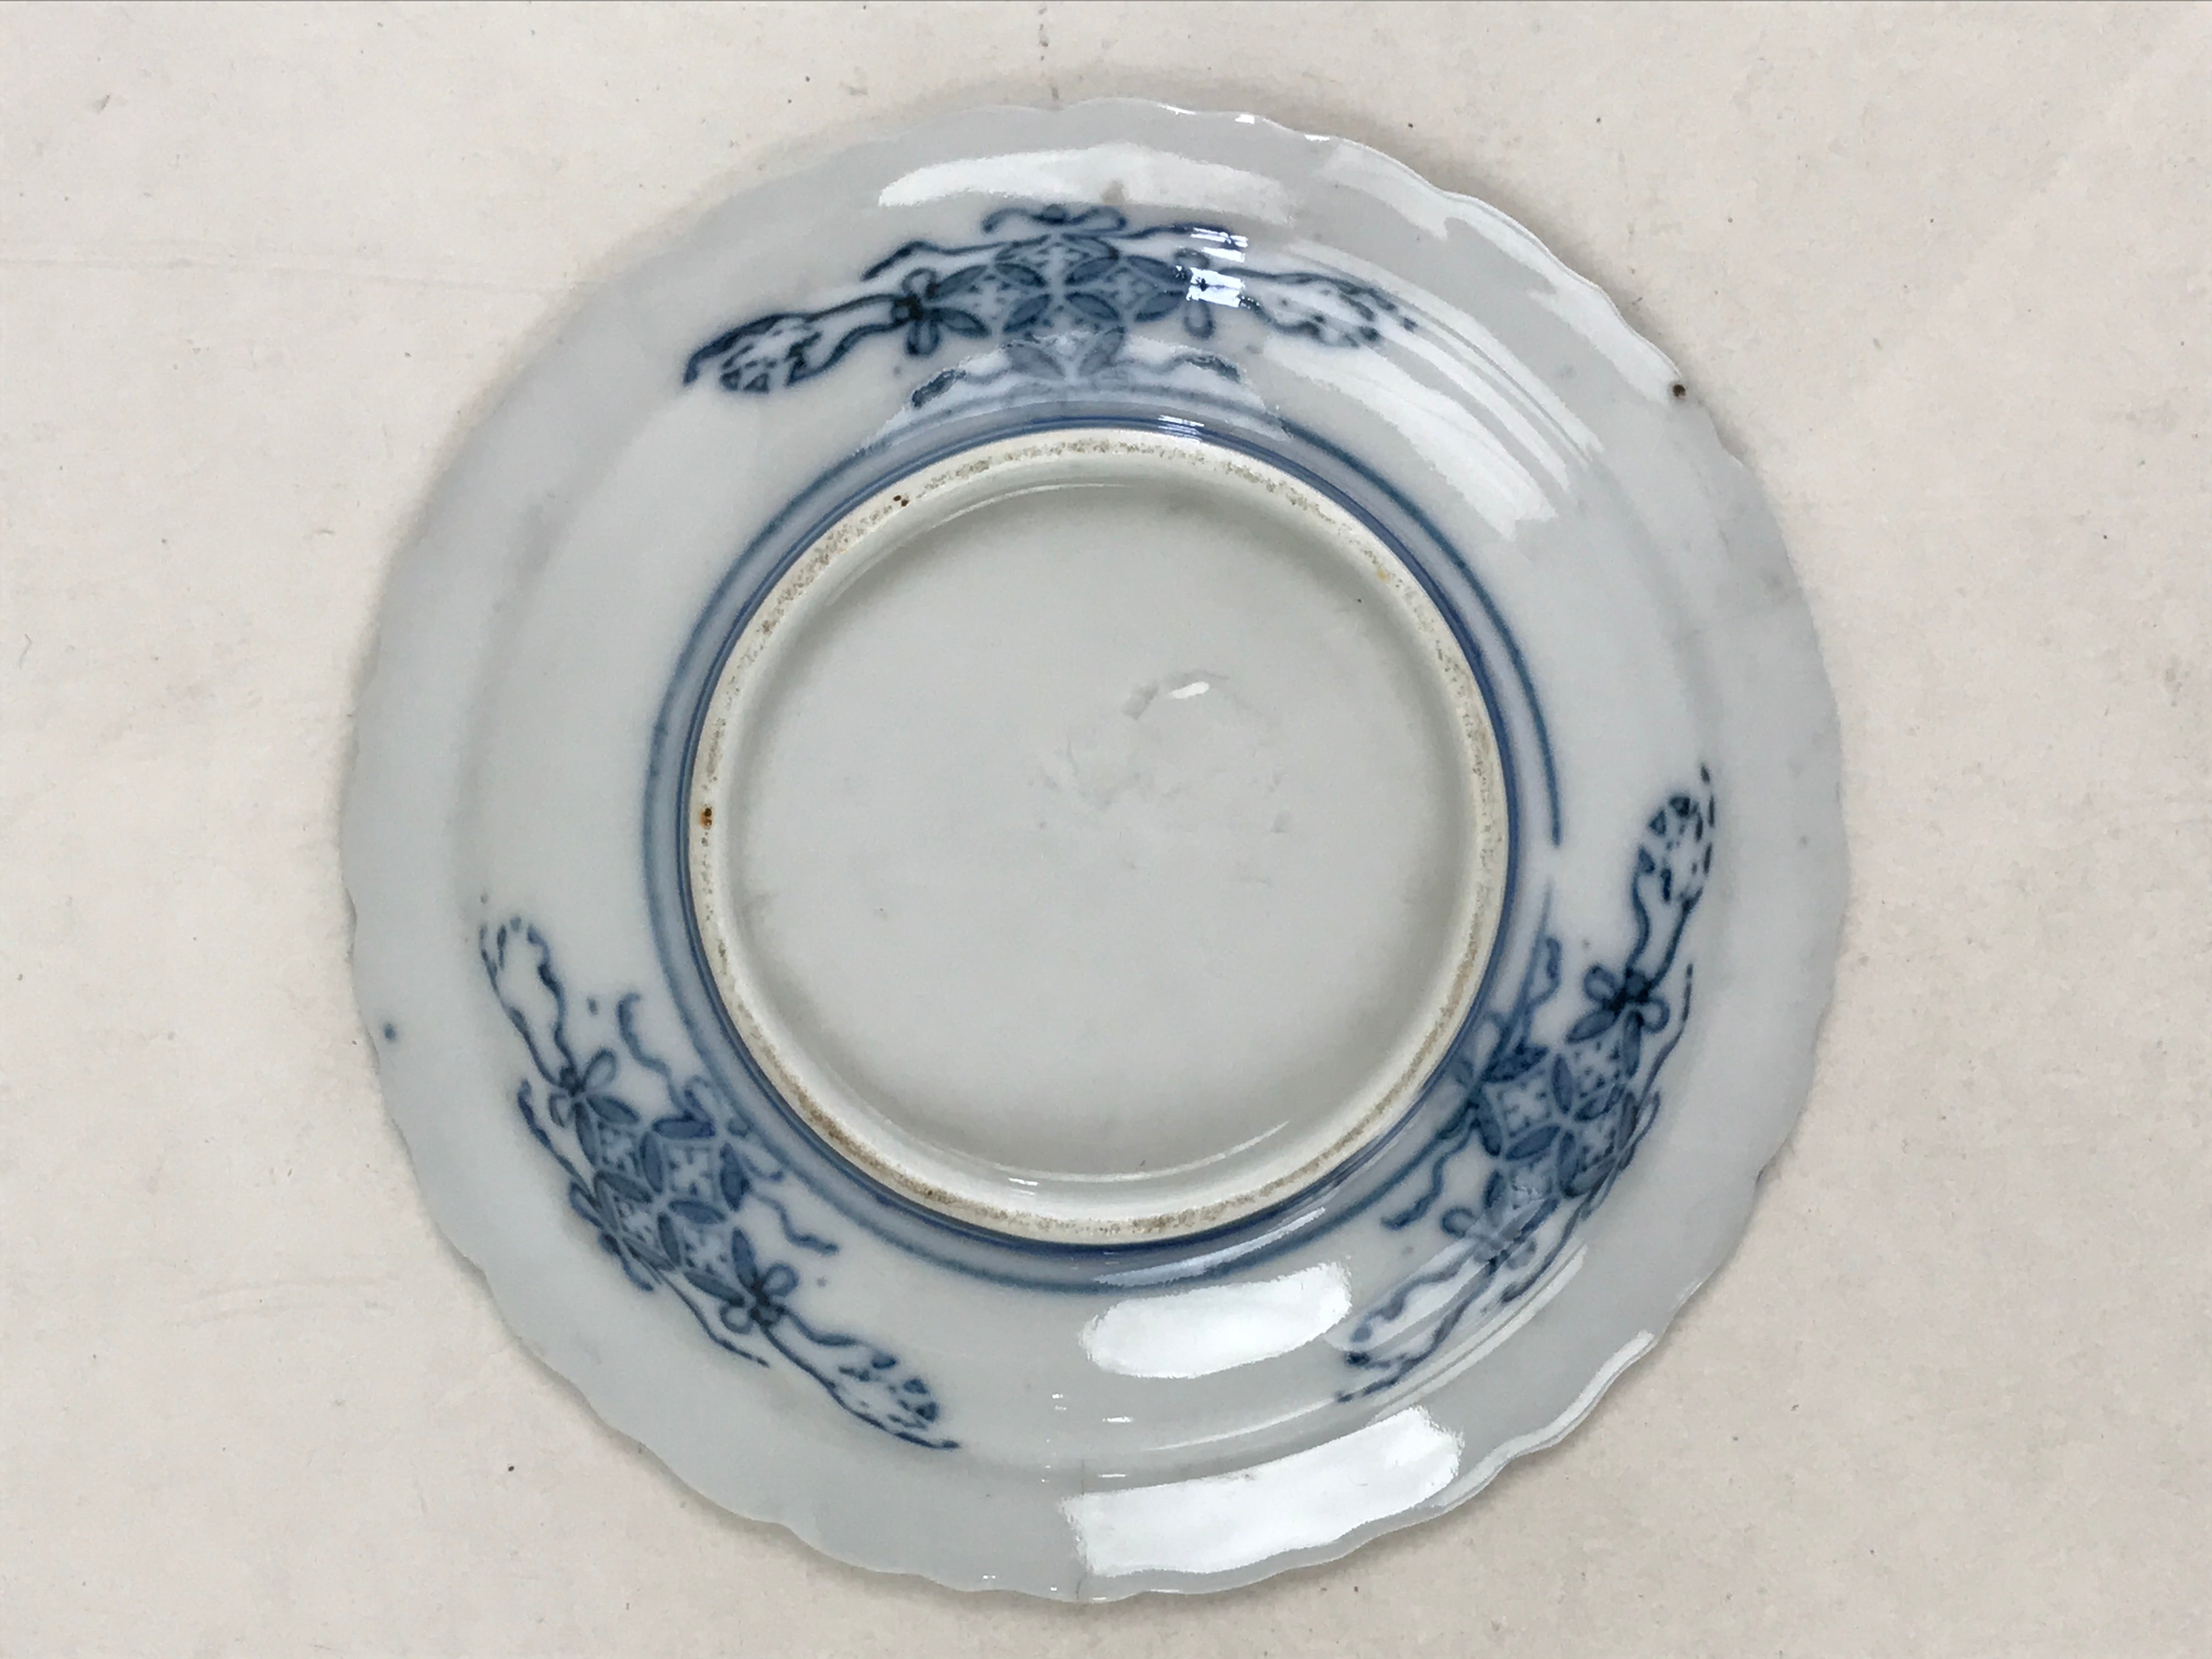 Antique Japanese Porcelain Side Plate Blue Sometsuke Mountain Road Kozara PY312